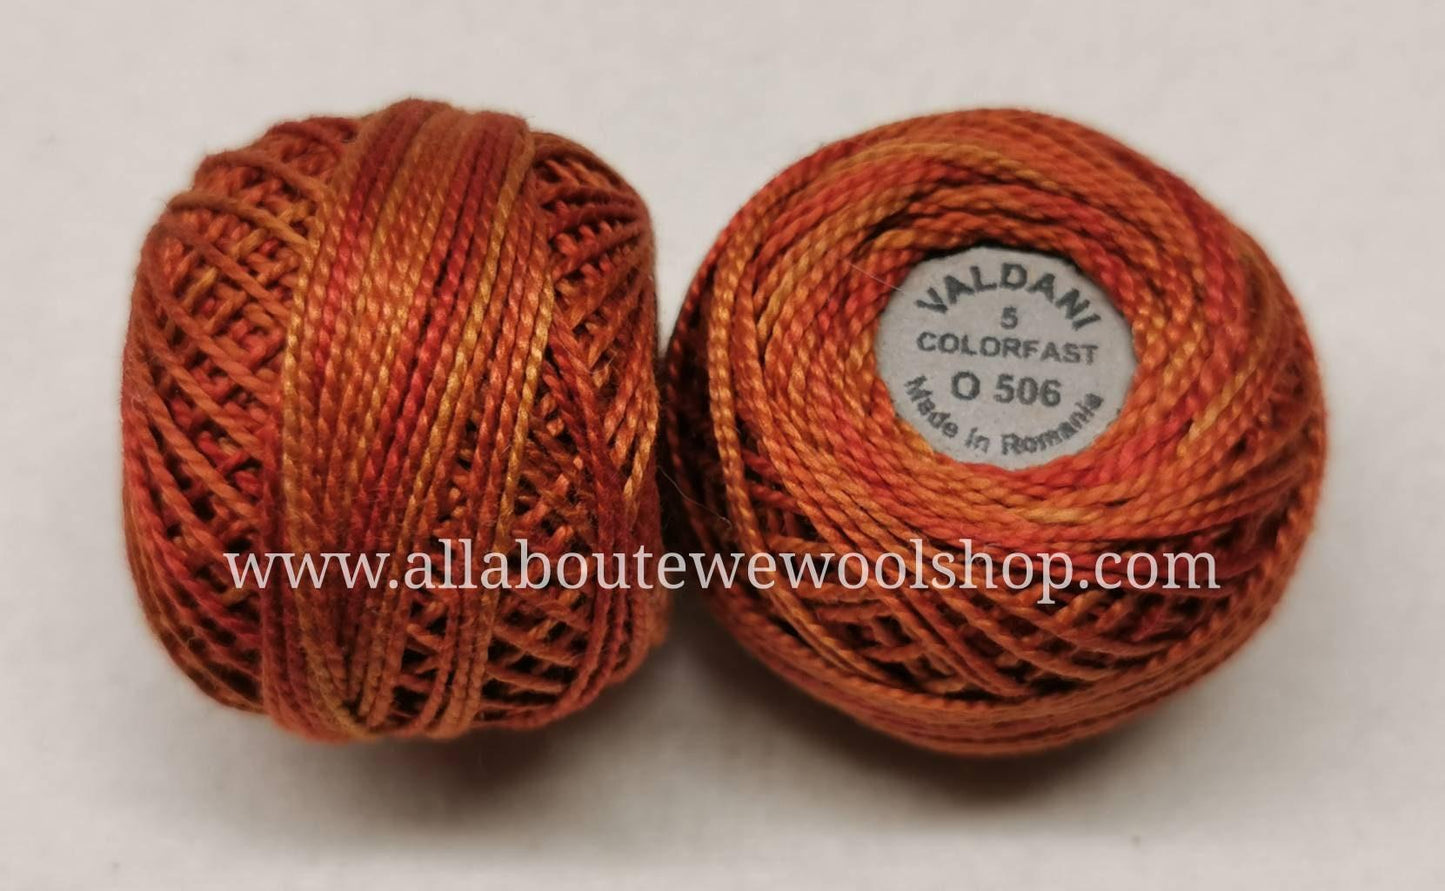 O506 #5 Valdani Pearl/Perle Cotton Thread - All About Ewe Wool Shop